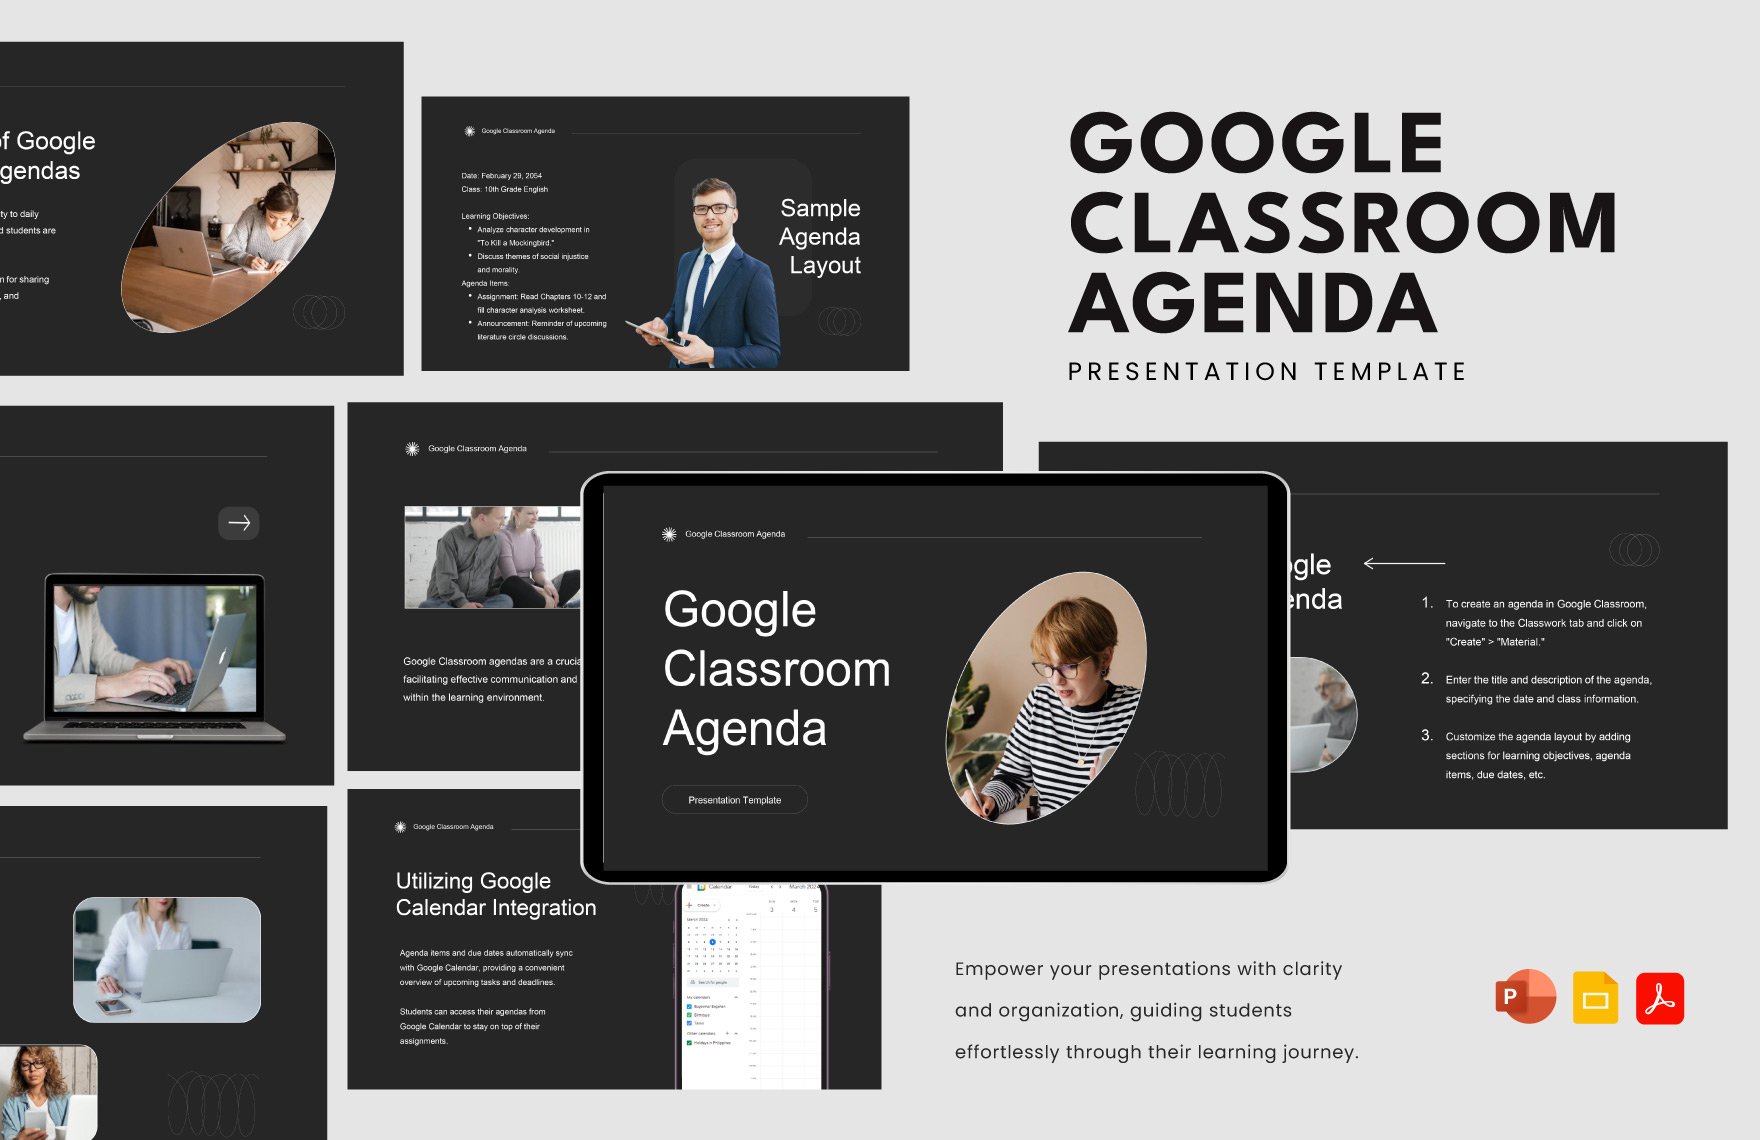 Google Classroom Agenda Template in PDF, PowerPoint, Google Slides